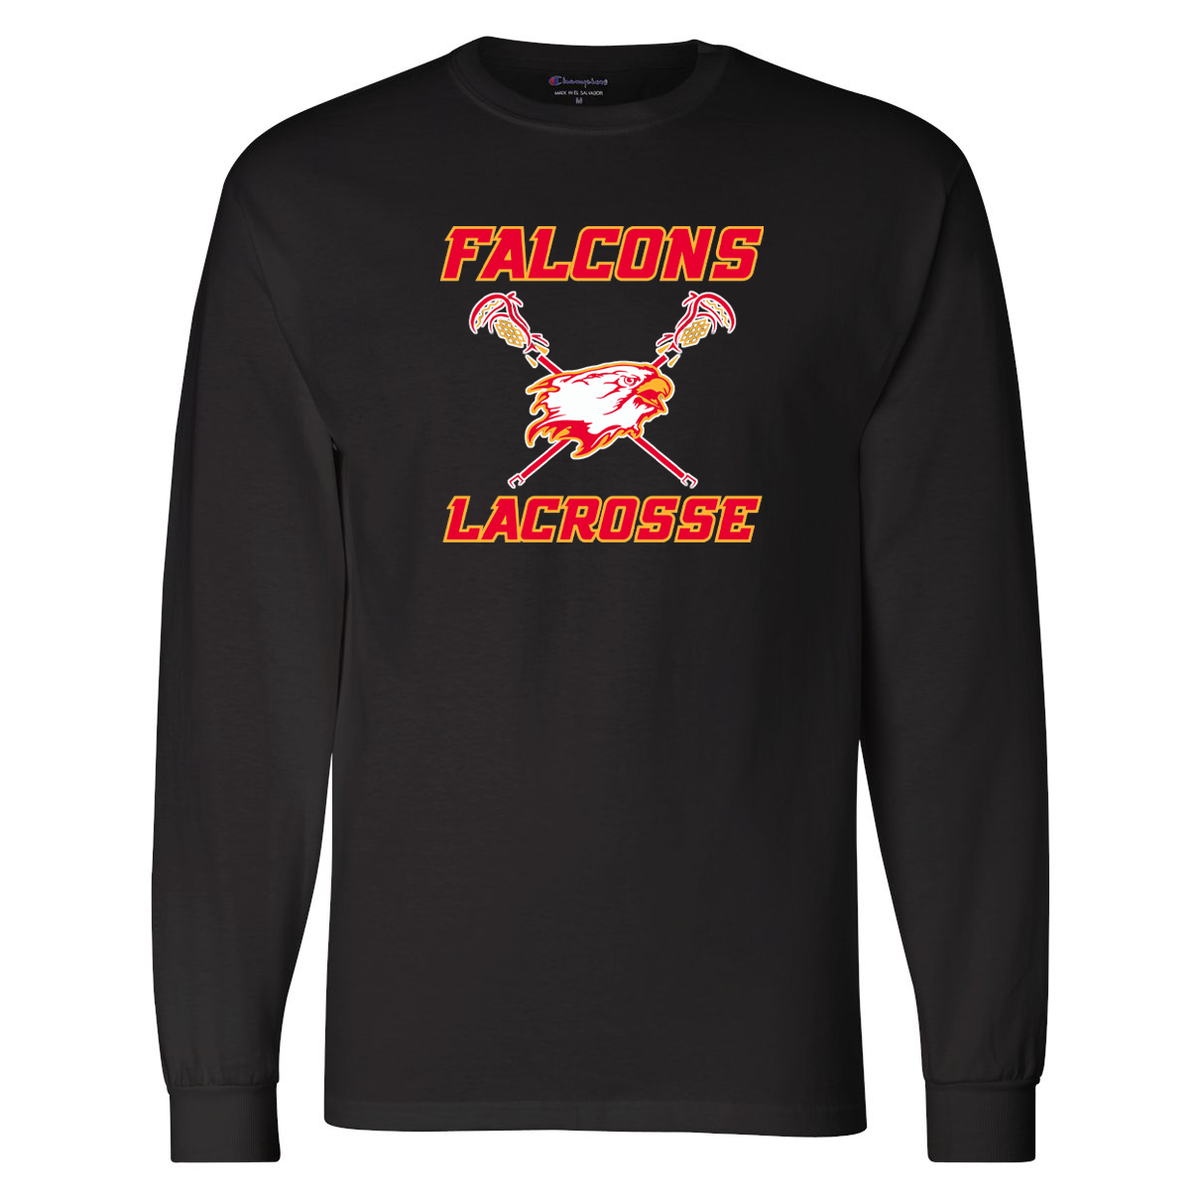 Falcons Lacrosse Club Champion Long Sleeve T-Shirt